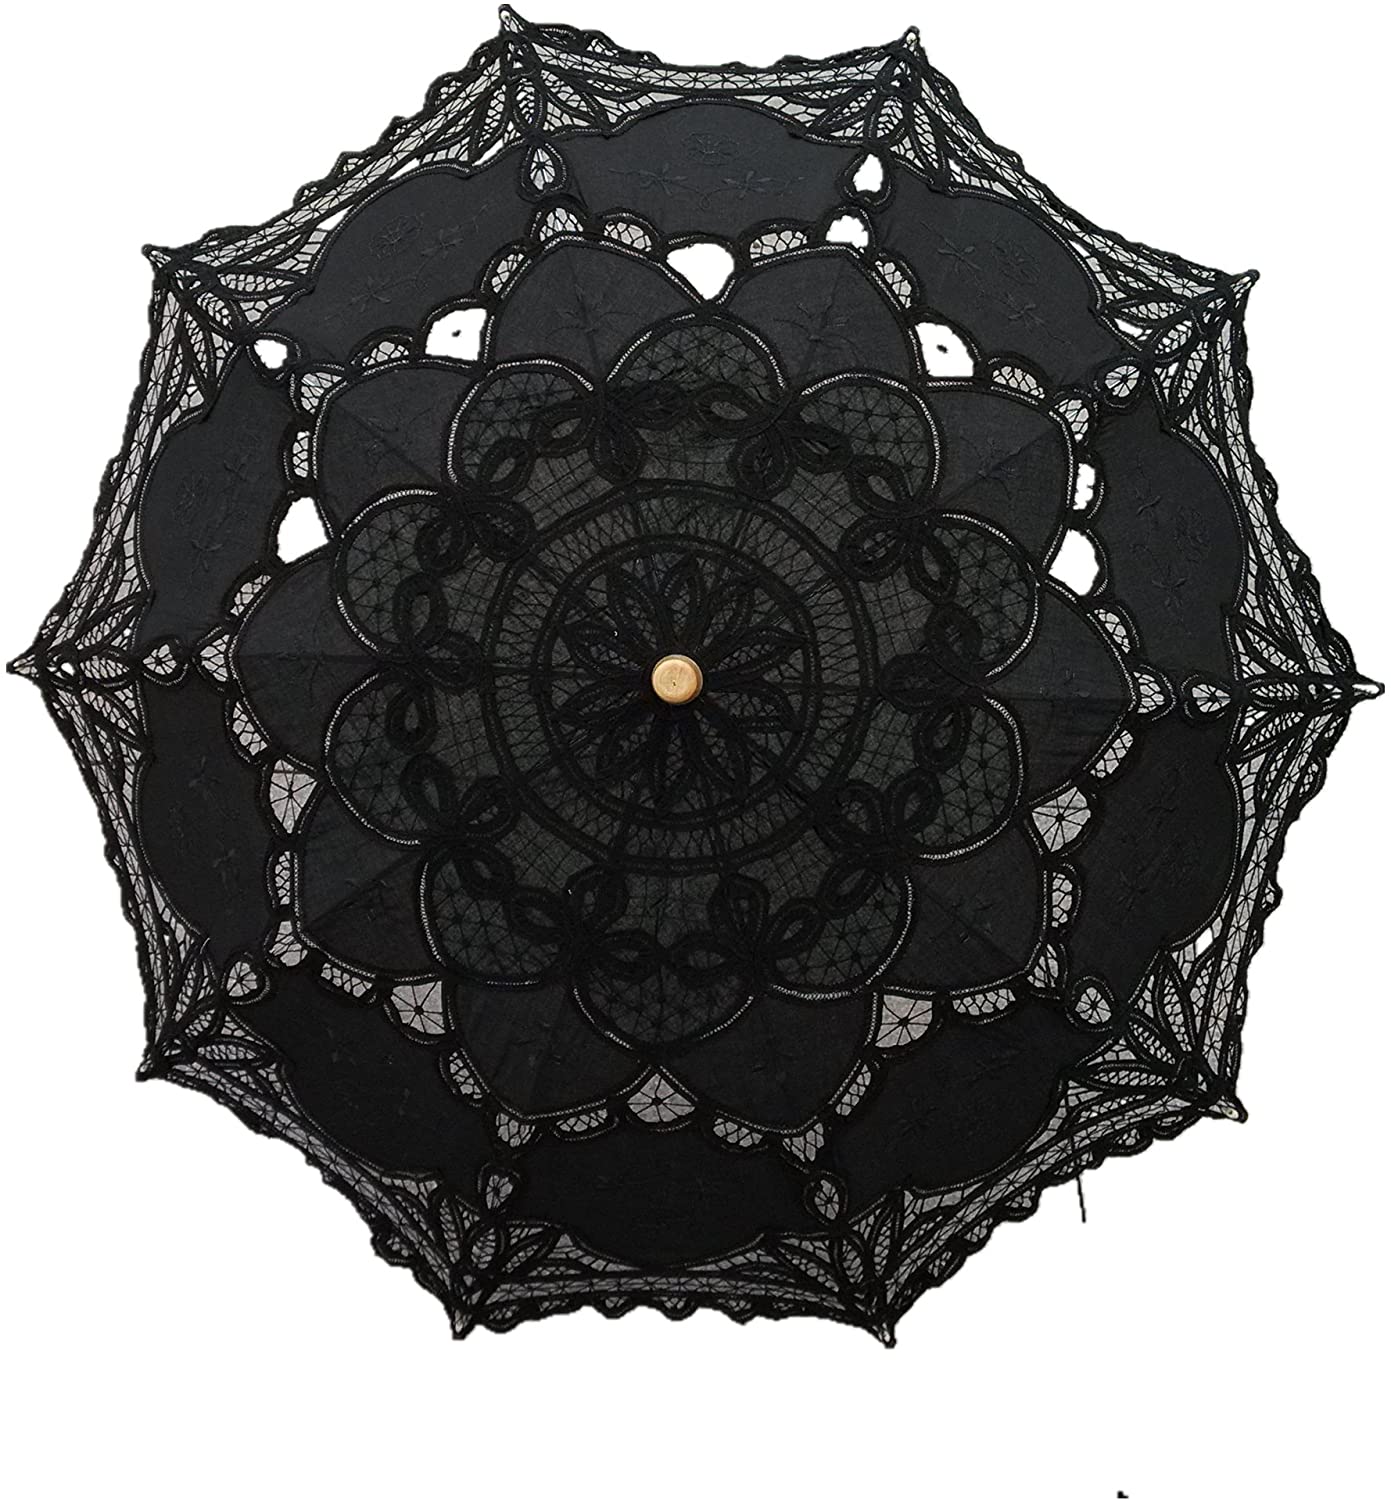 Aeaoa Handmade Black Lace Parasol Umbrella